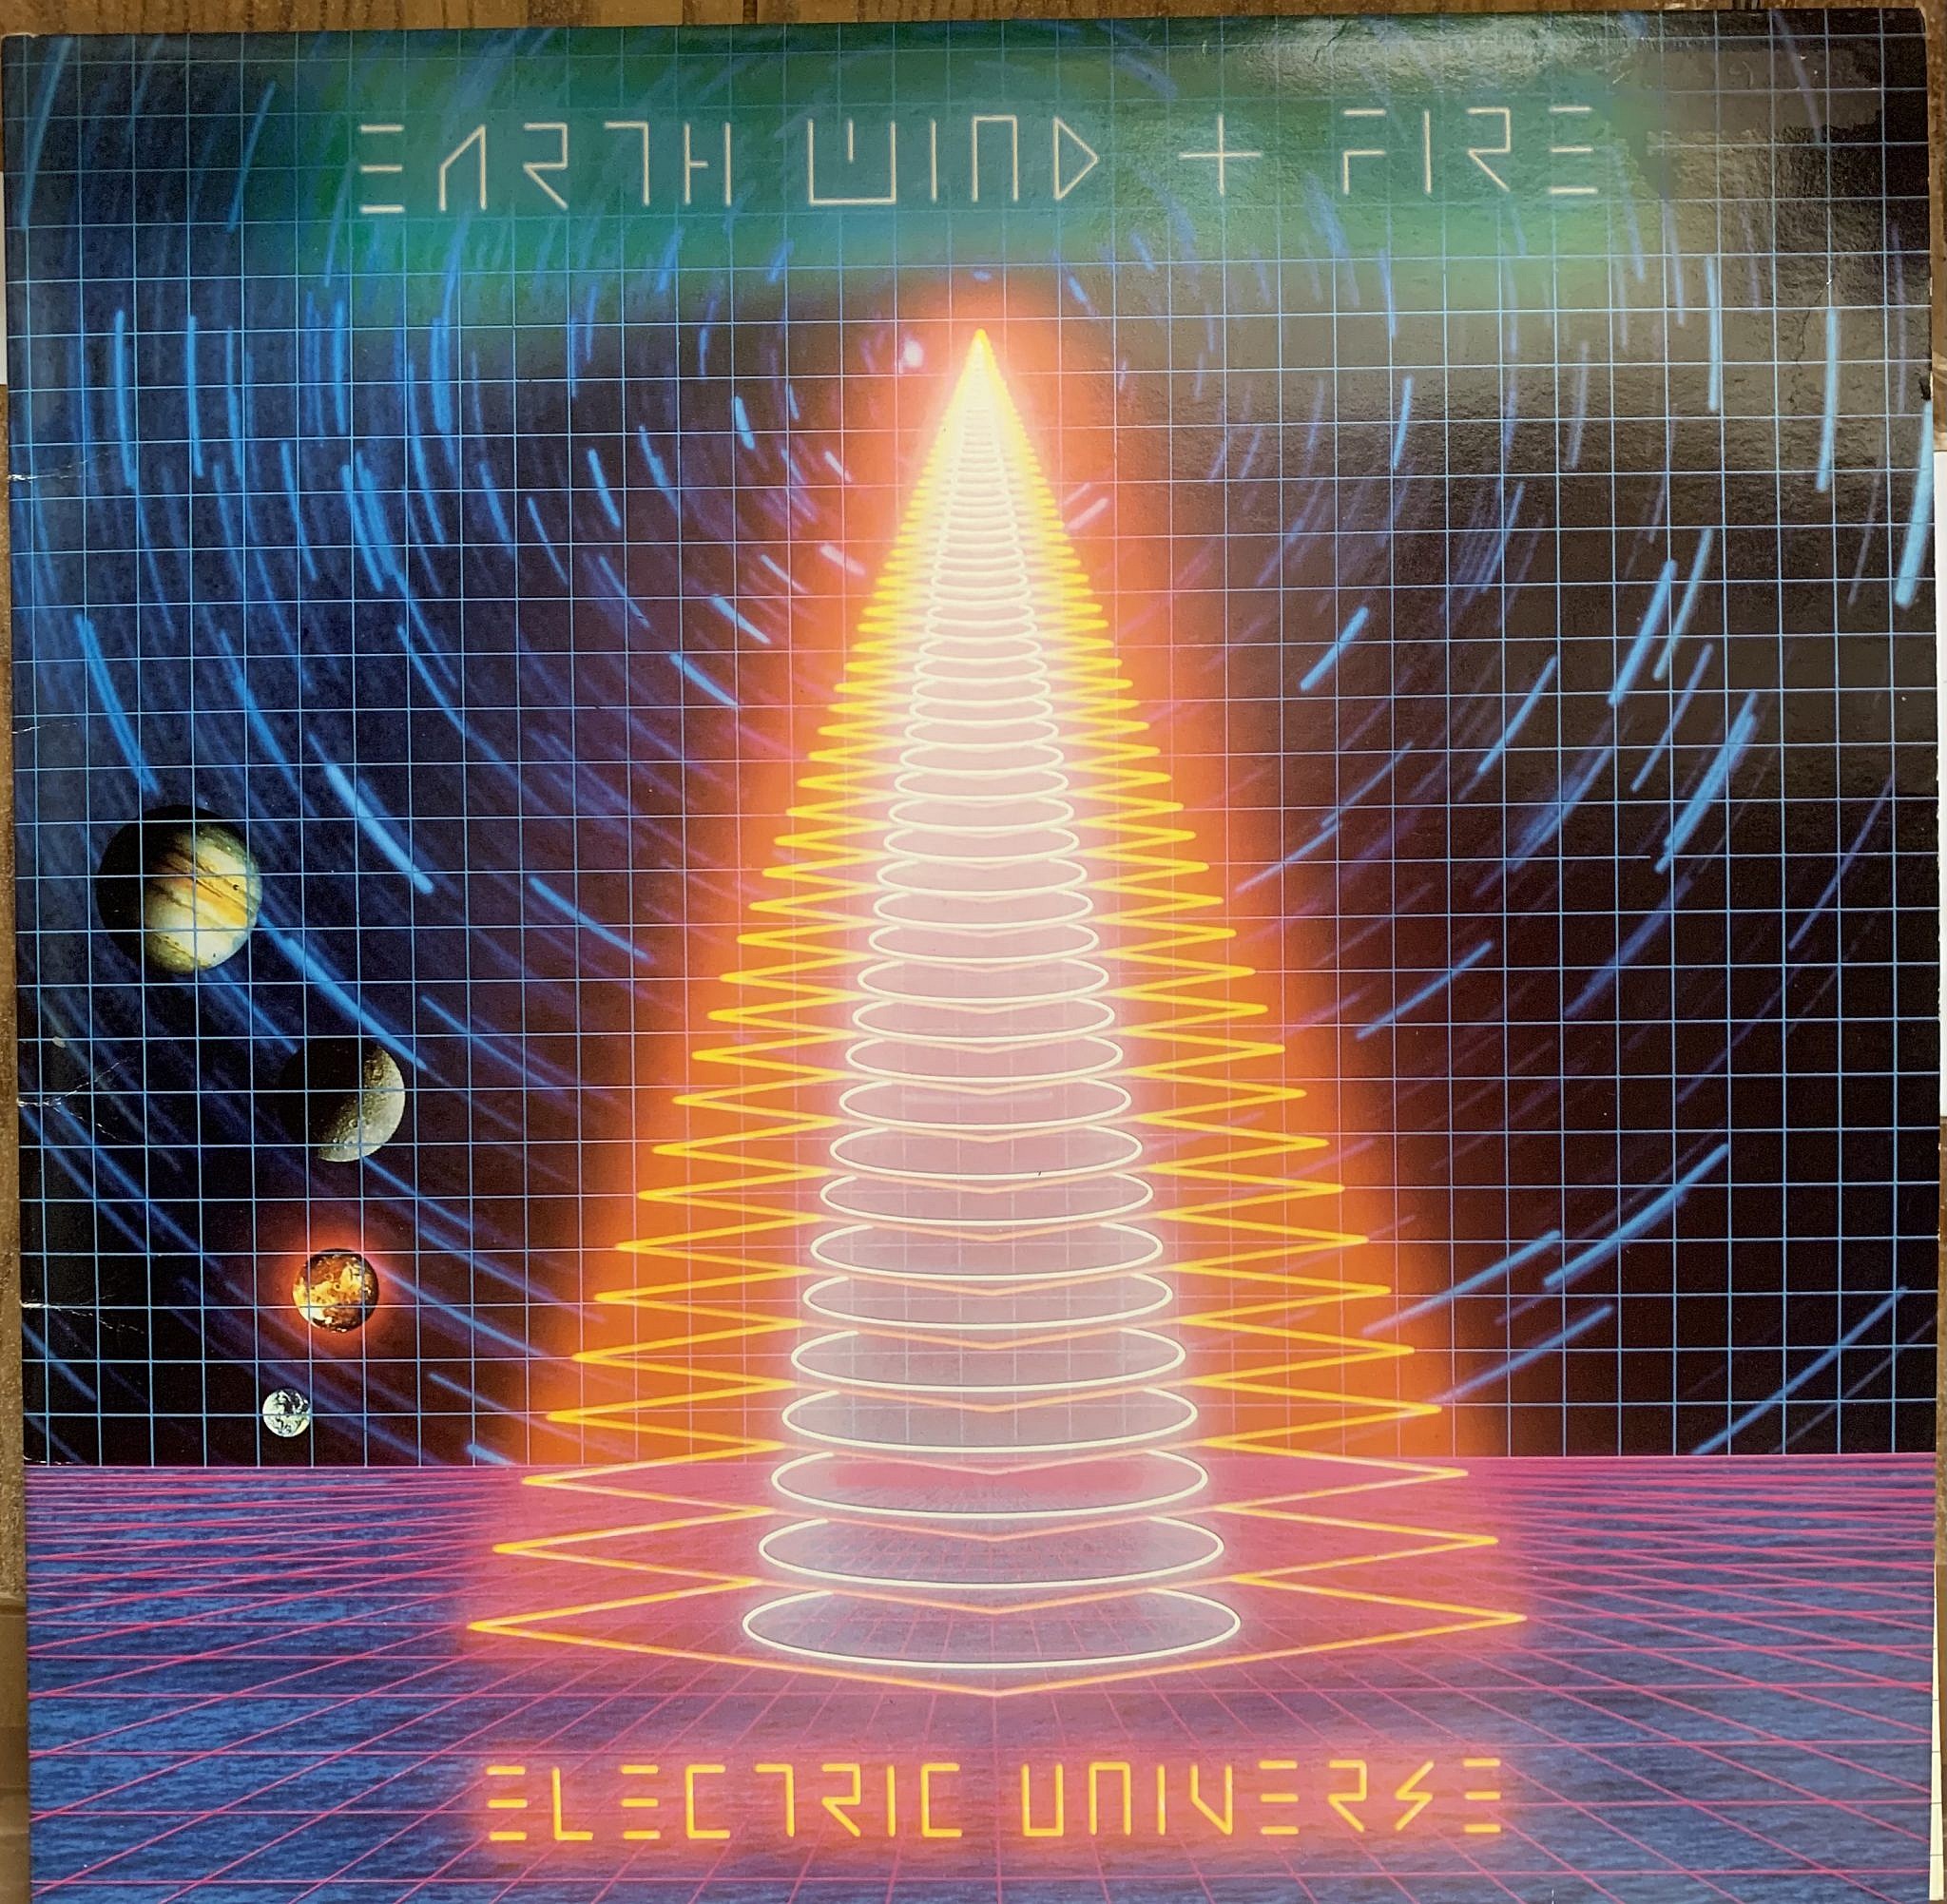 Earth, Wind & Fire - Electric Universe - LP, Vinyl Music - Cbs